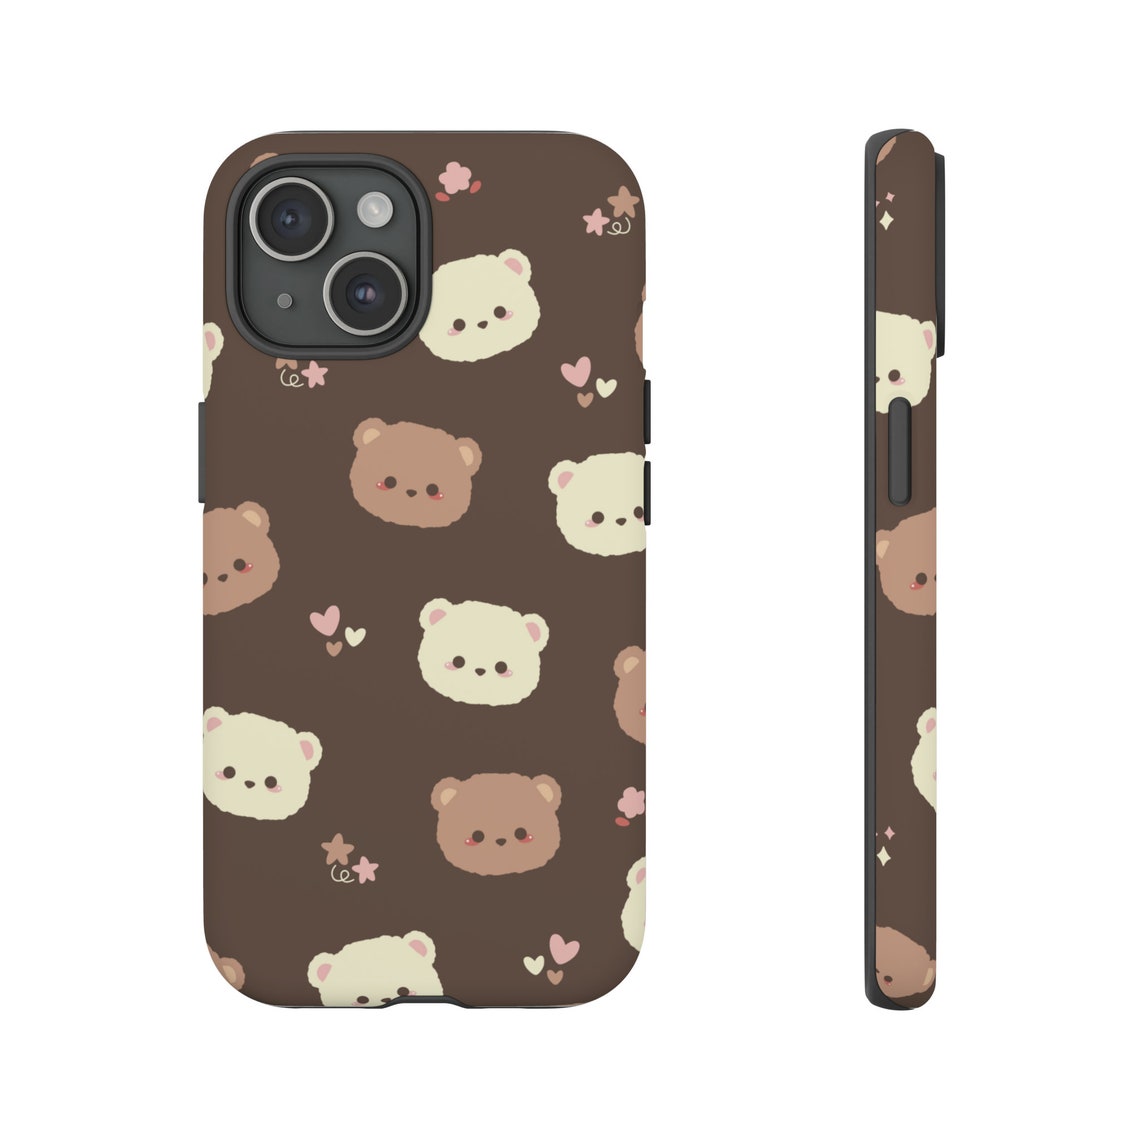 Cute Teddy Bear iPhone Hardcover Case - Etsy